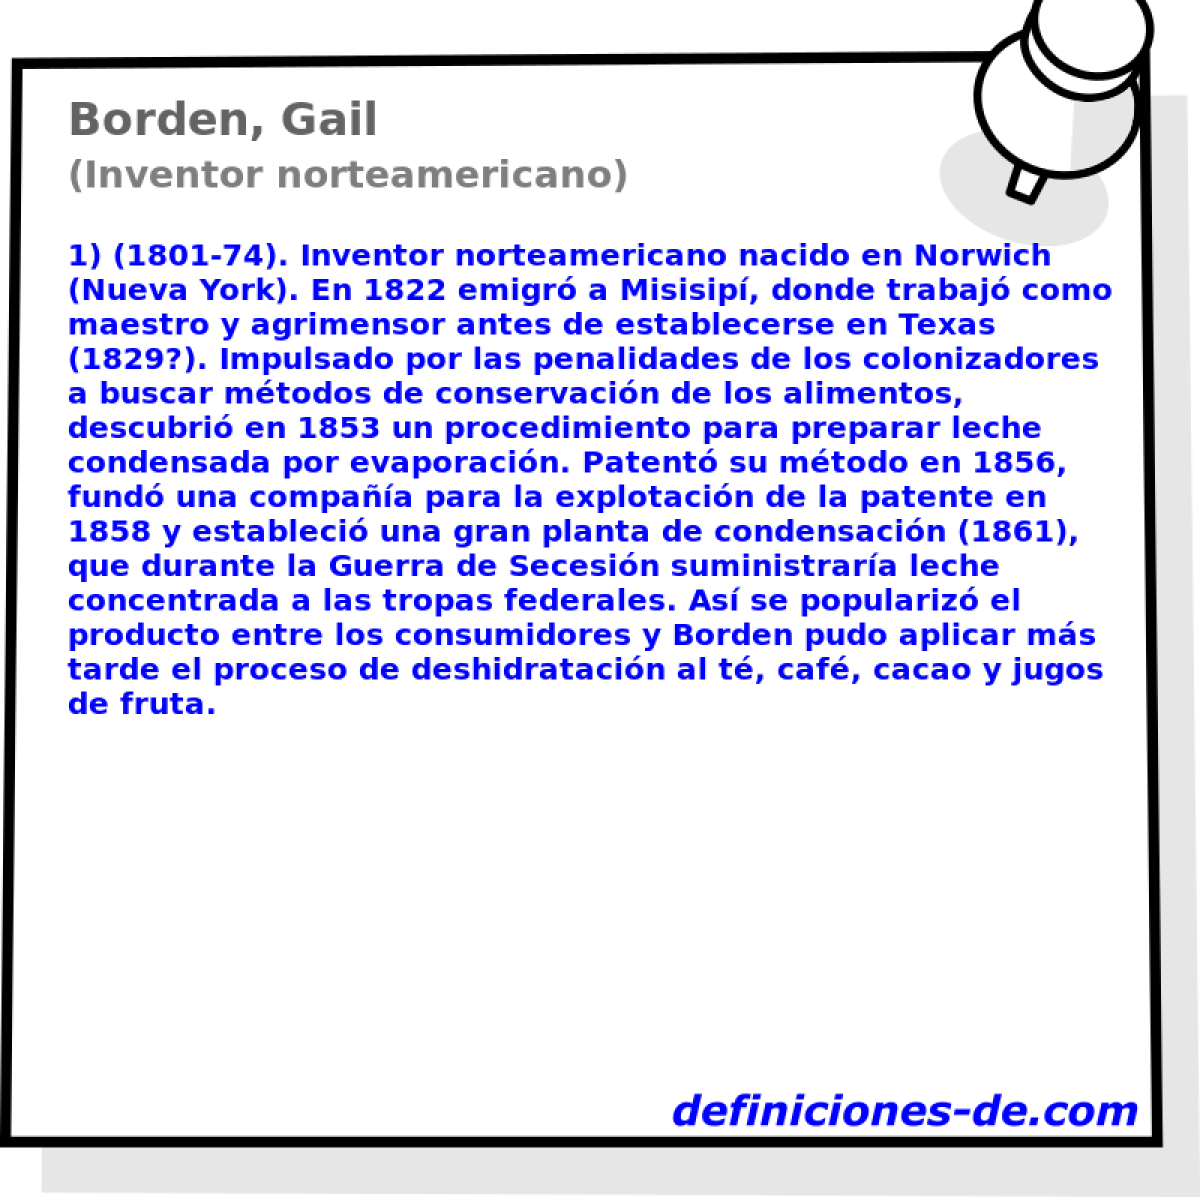 Borden, Gail (Inventor norteamericano)